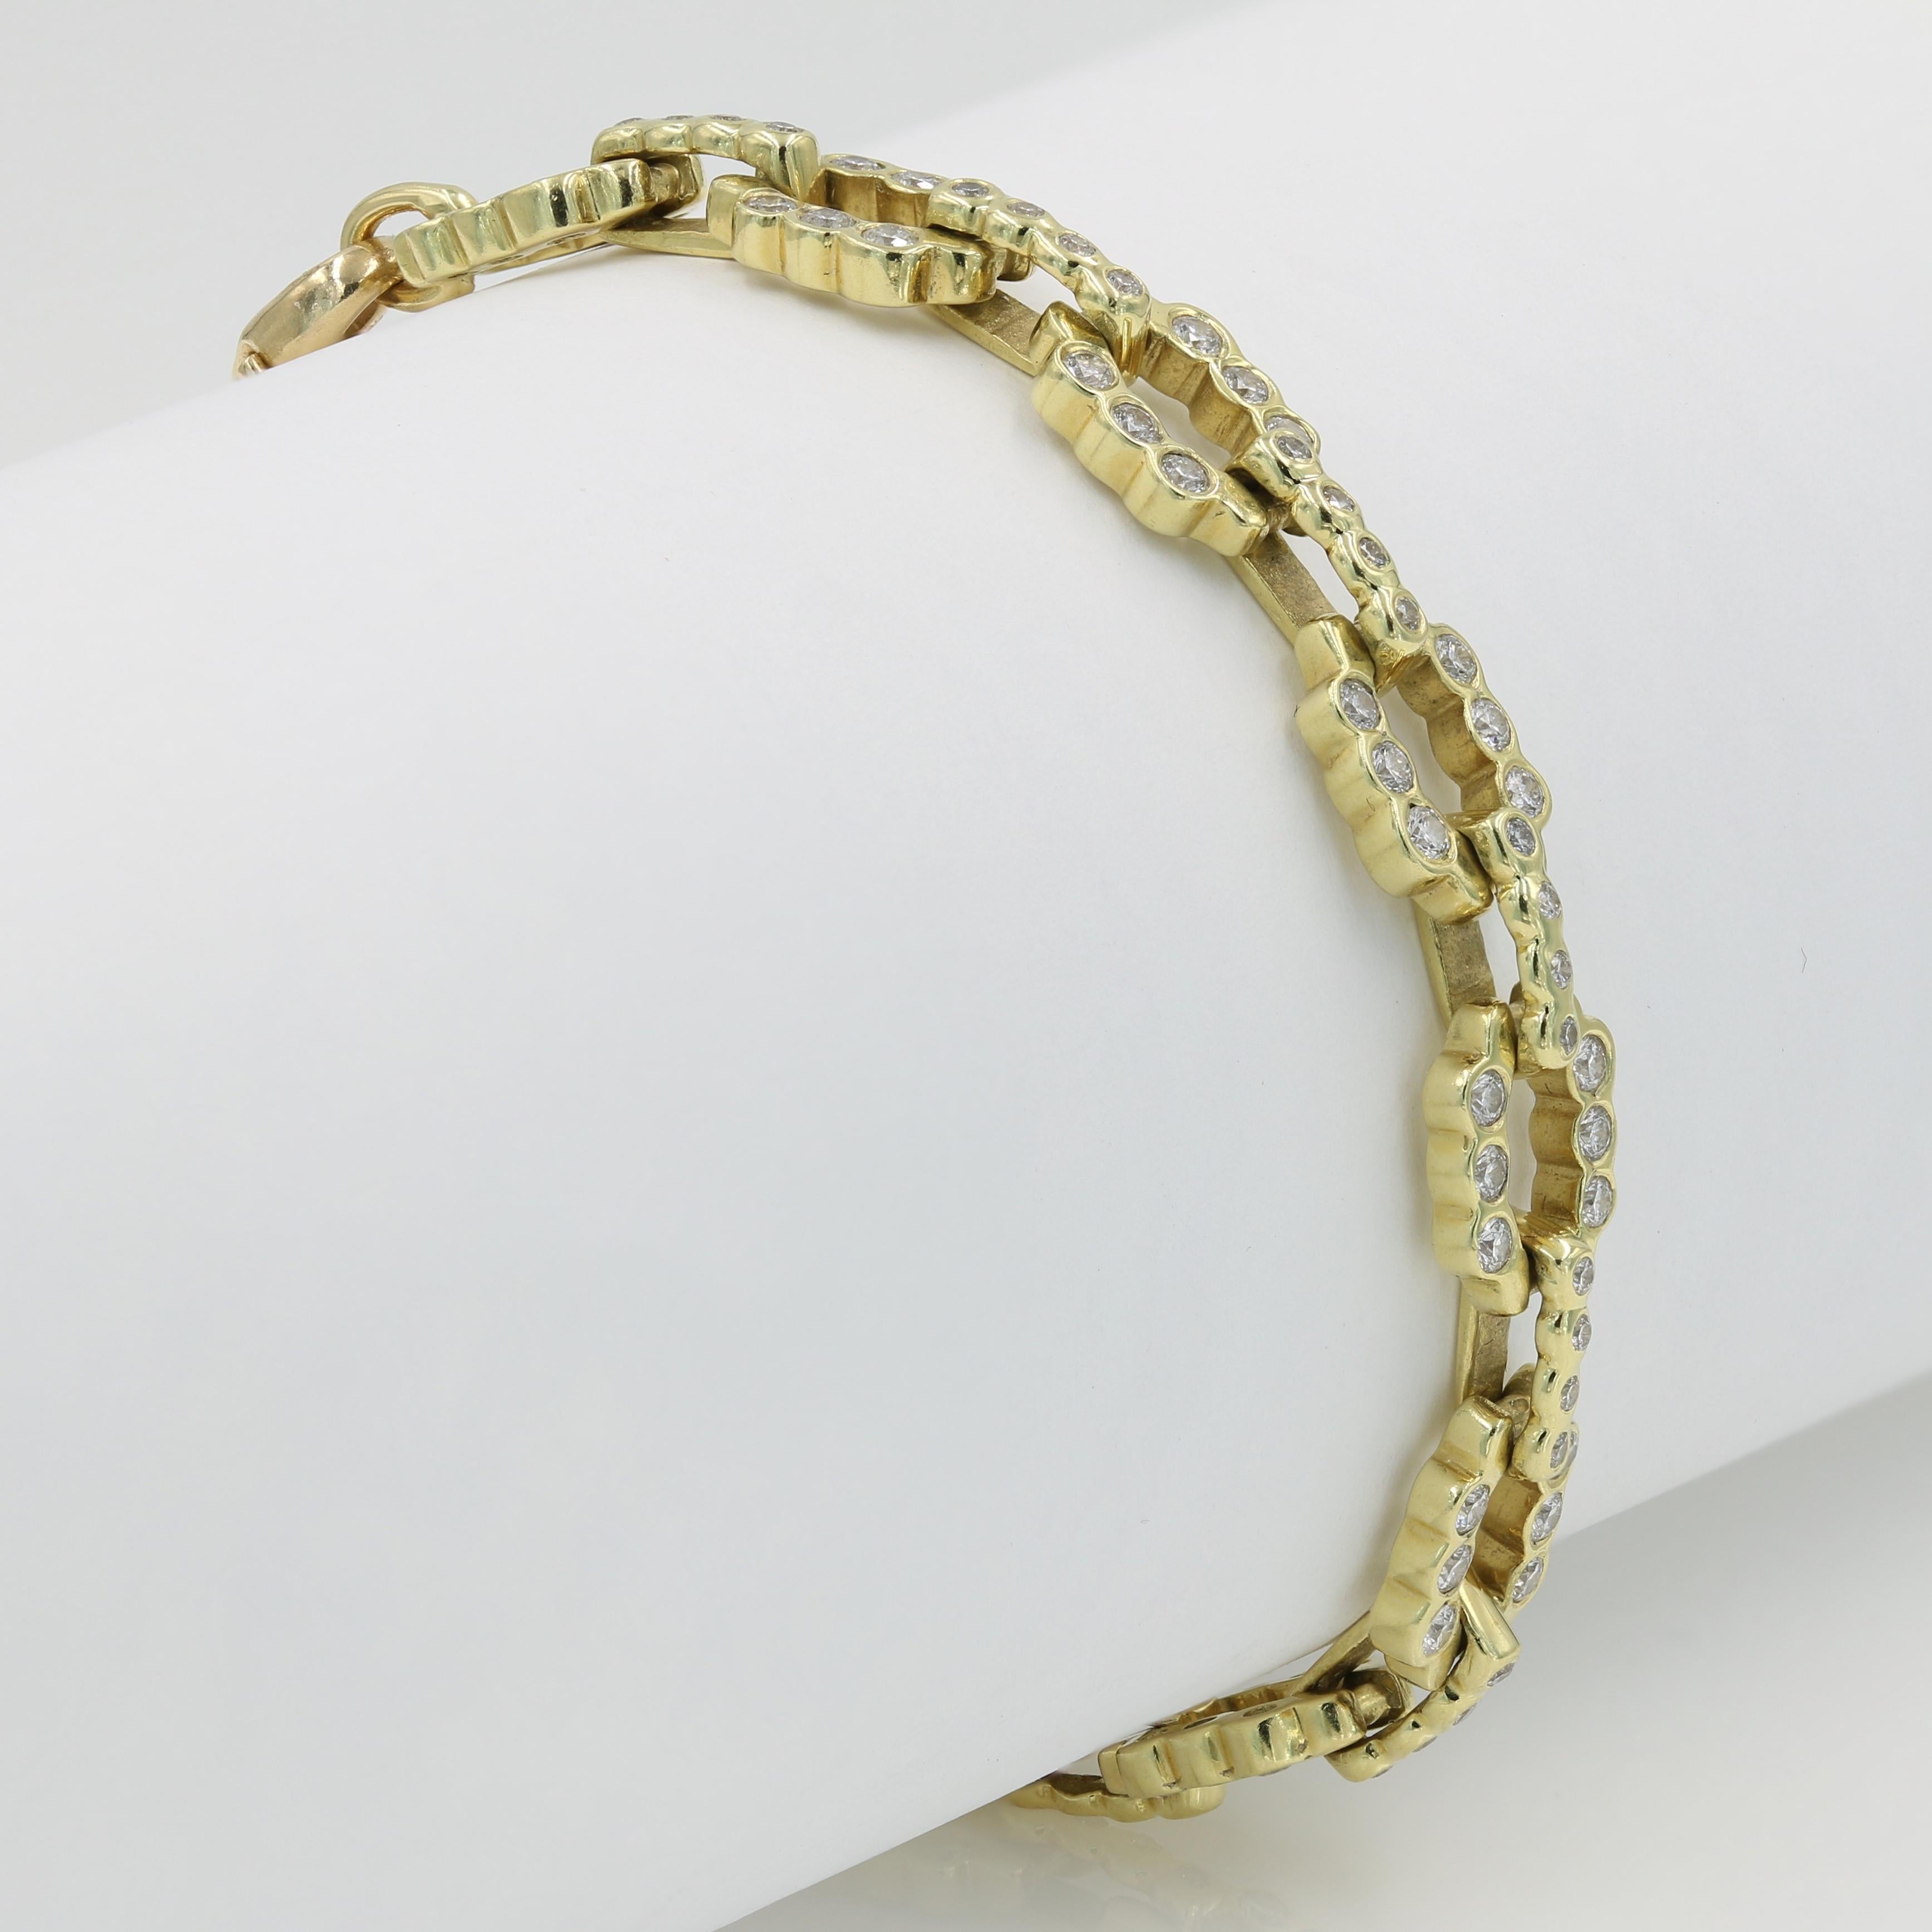 Round Cut Lester Lampert Designed Diamond Link Bracelet in 18 Karat Yellow Gold